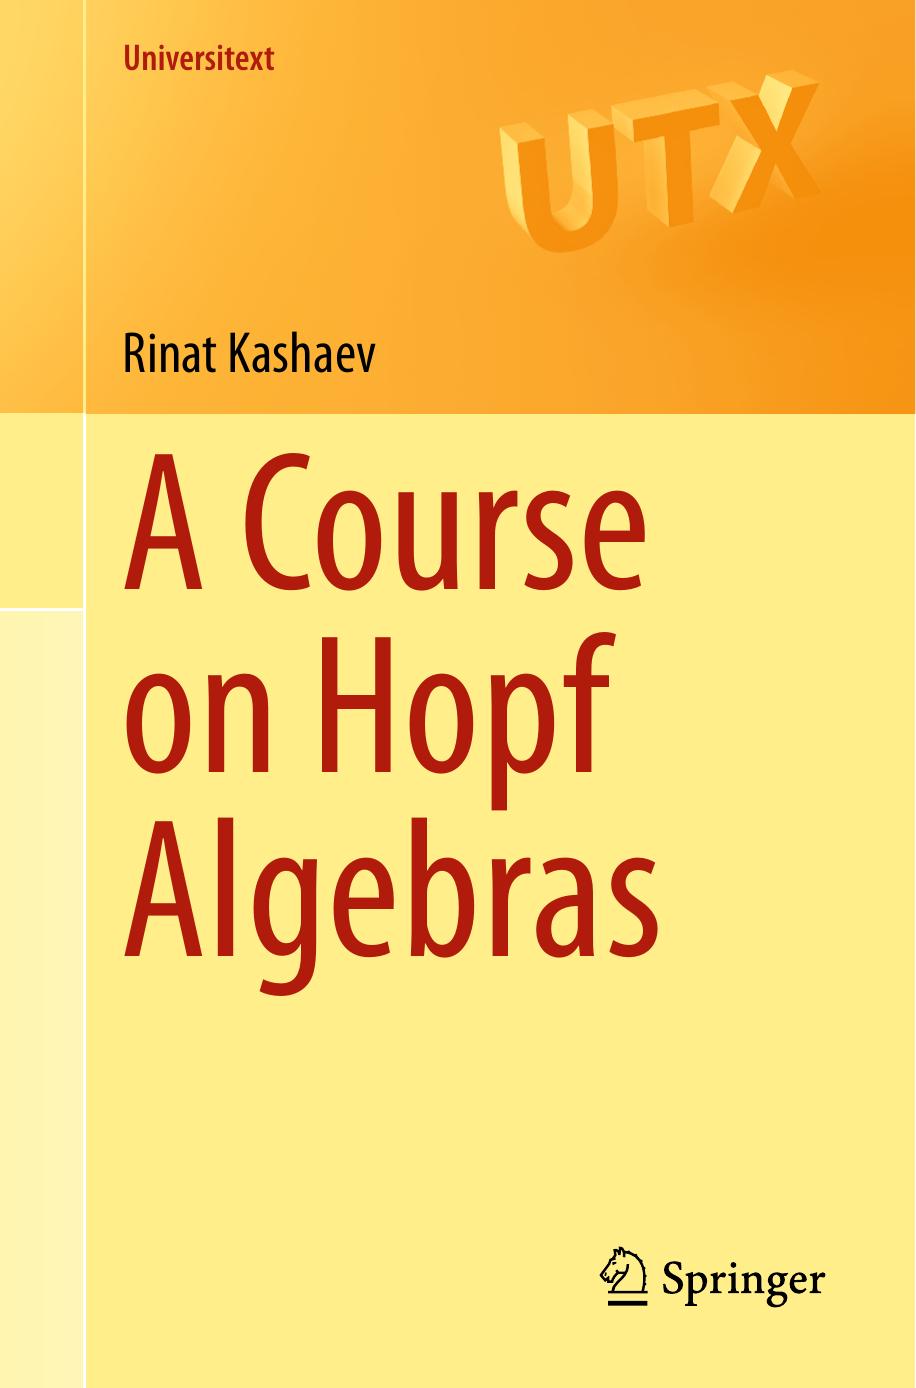 A Course on Hopf Algebras by Rinat Kashaev